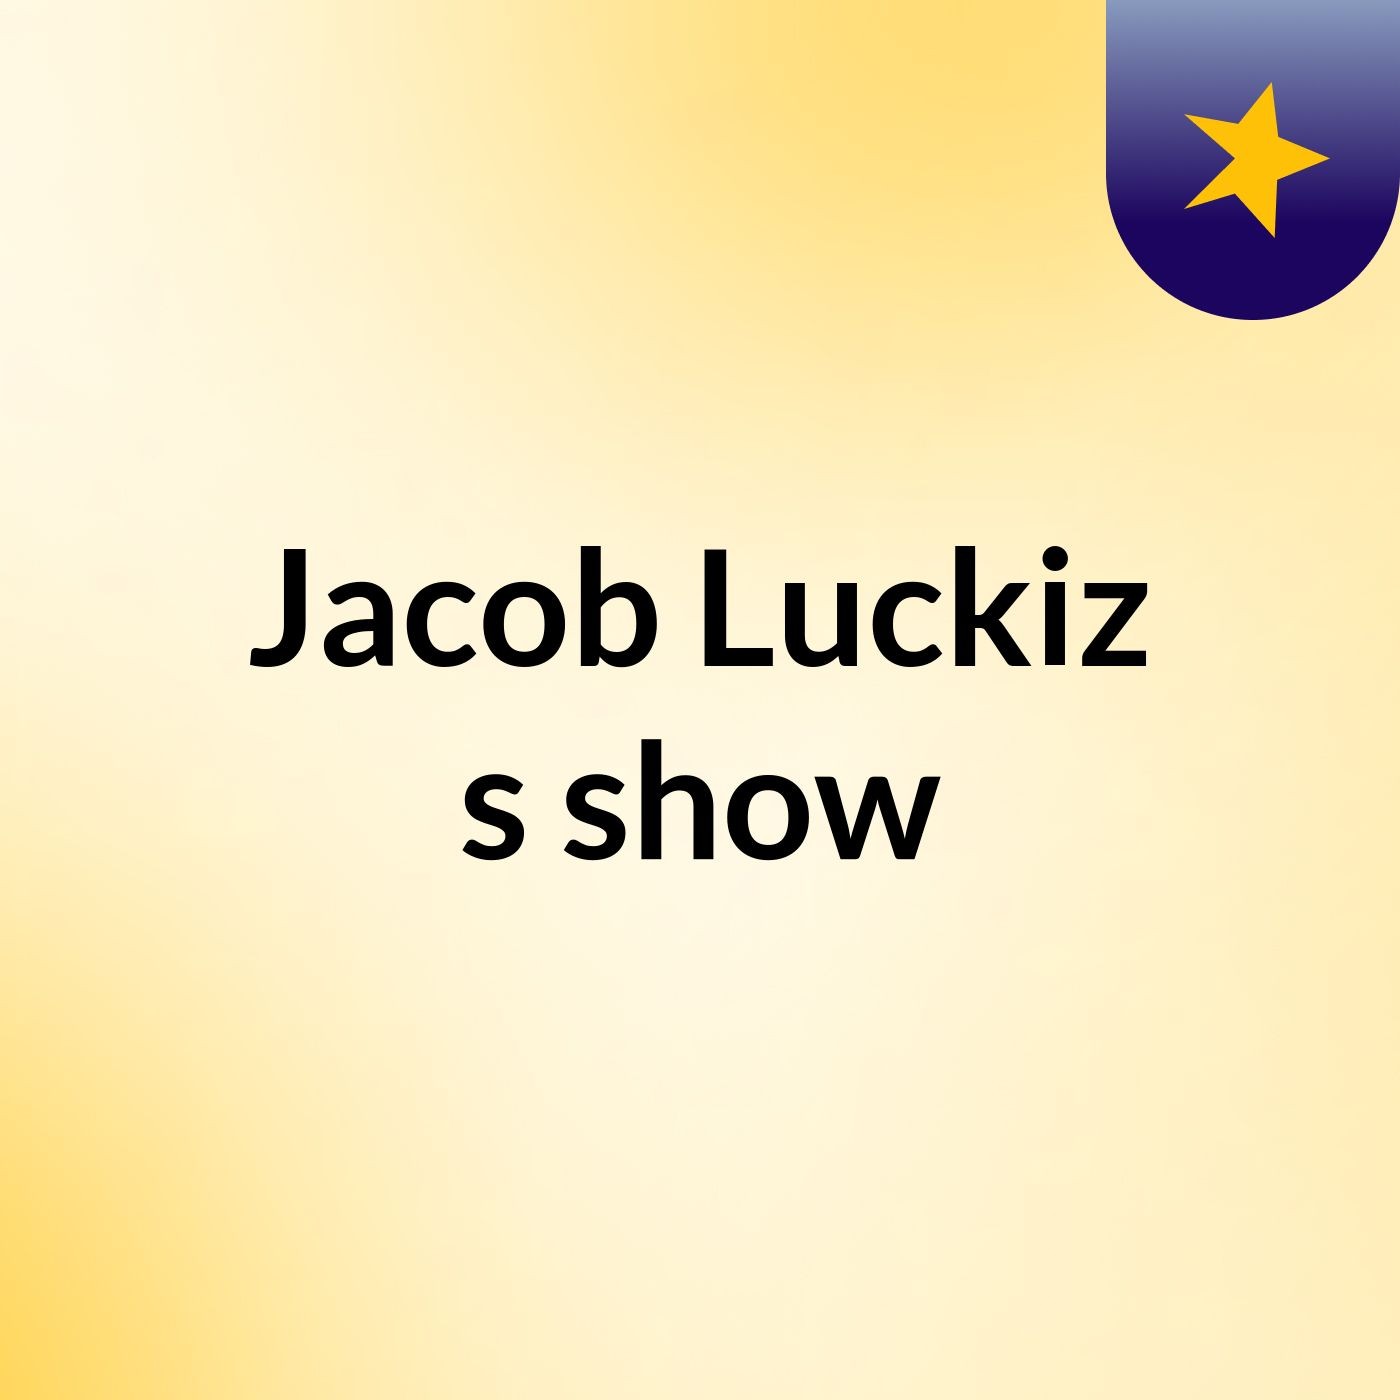 Episode 4 - Jacob Luckiz's show